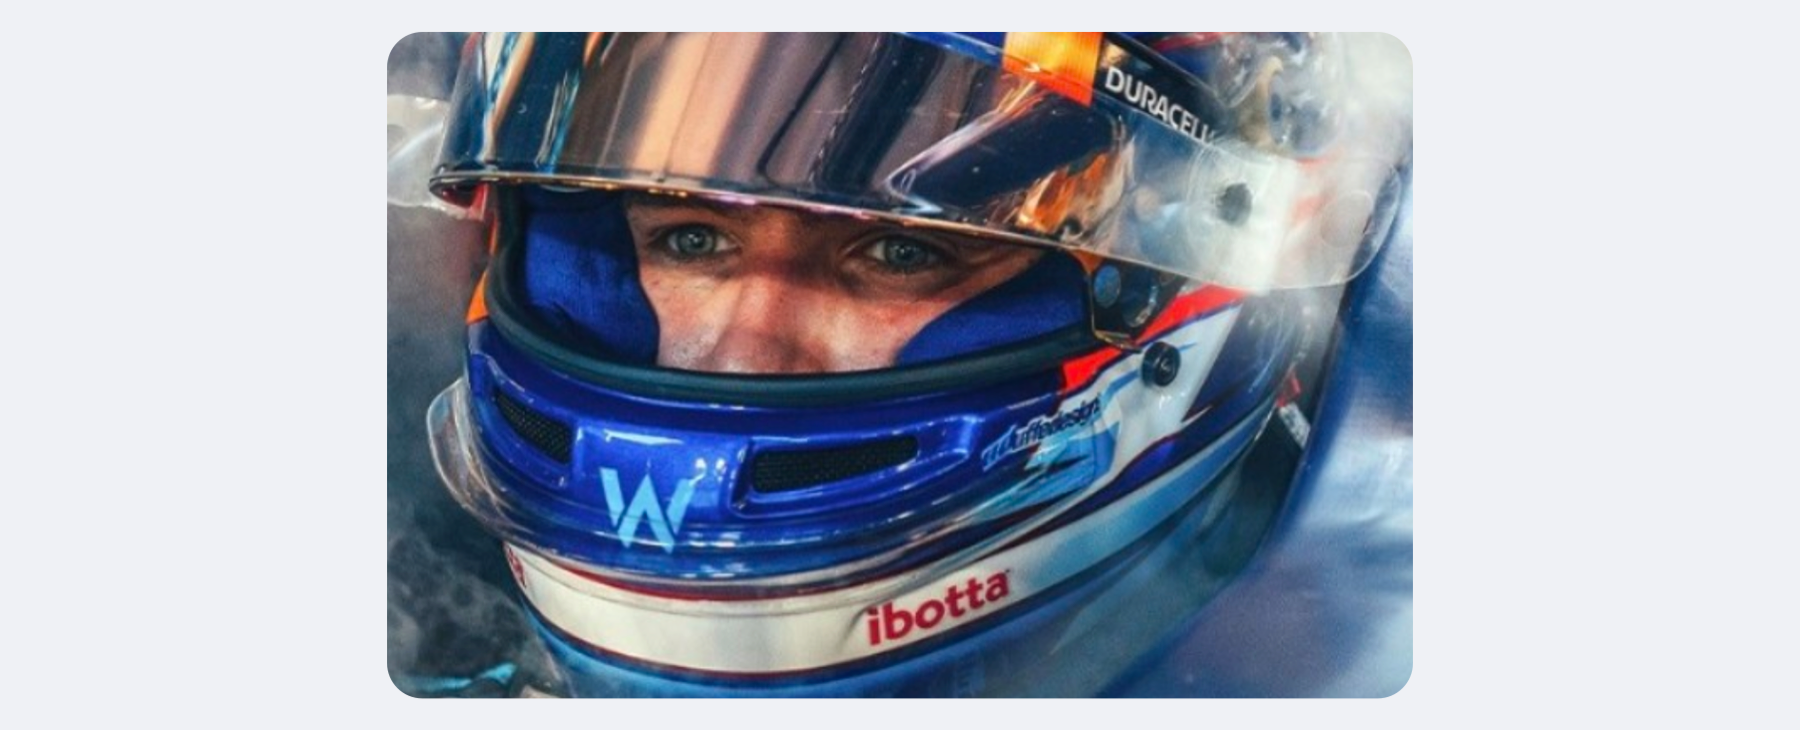 Ibotta Becomes the Brand Sponsor of Debut Formula 1 Driver, Logan Sargeant